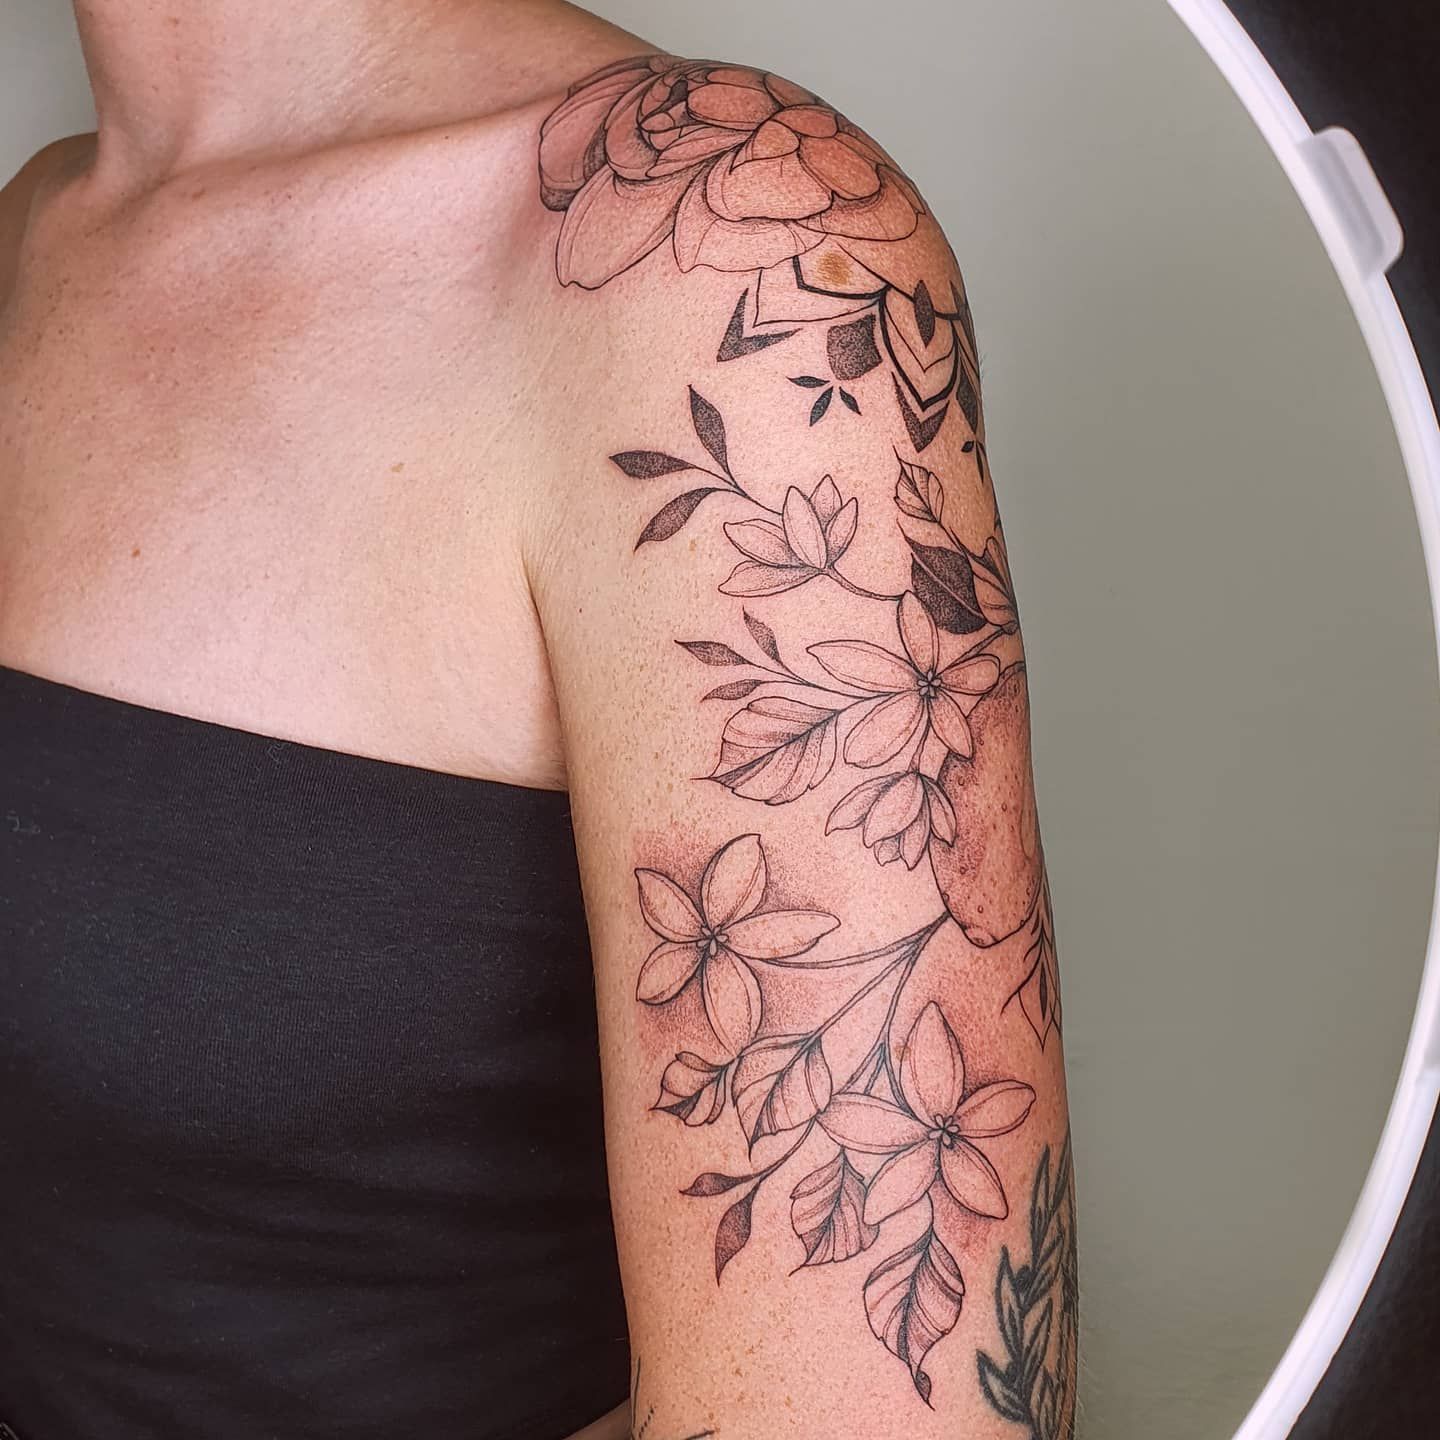 Dogwood flower tattoos